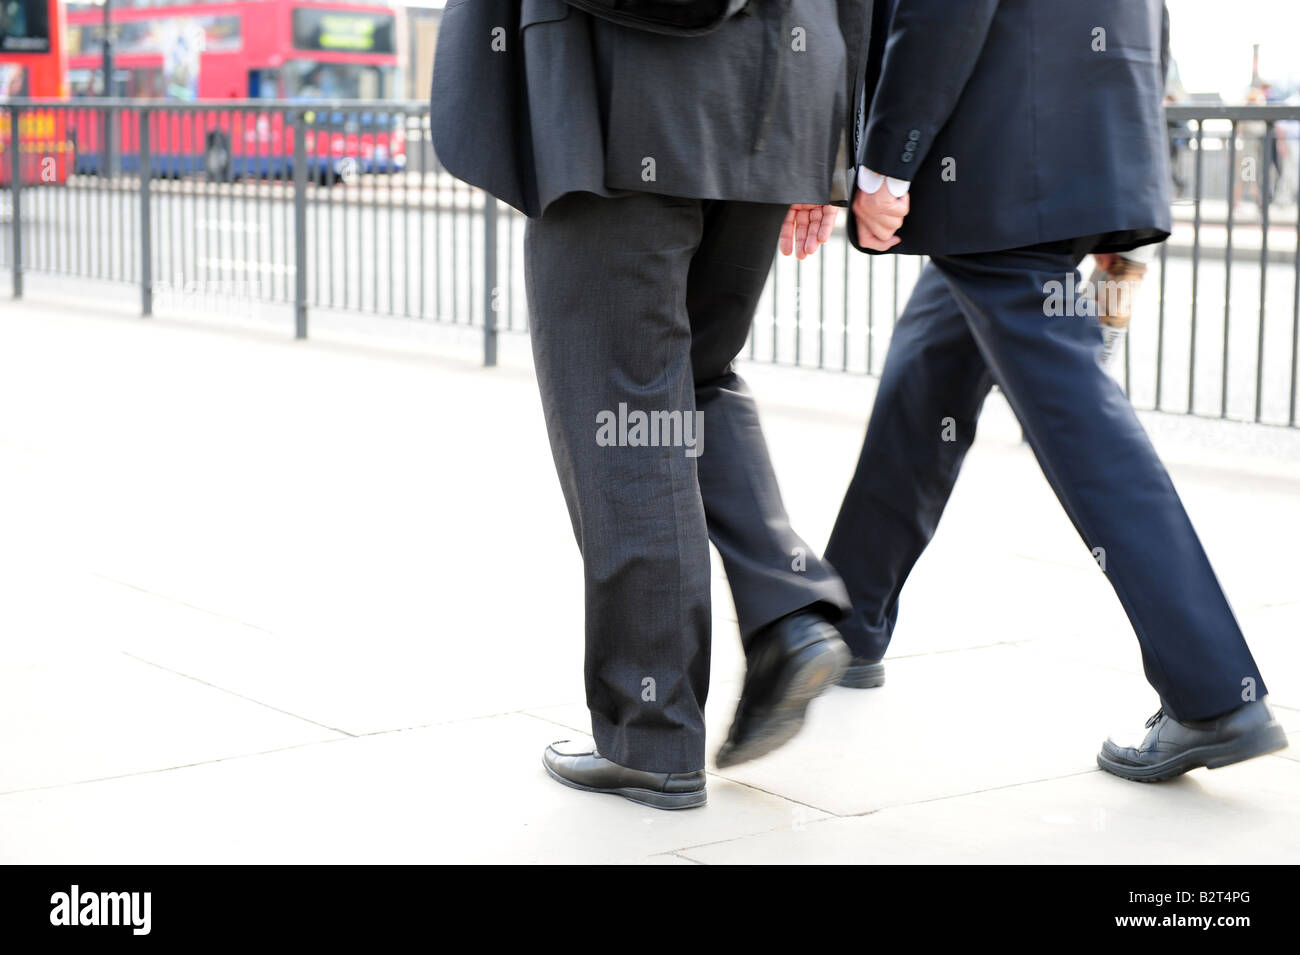 Pendler, die zu Fuß über London Brücke Mann Frau Arbeiter London Brücke zu Fuß zu Fuß spät Pendler Weg Gehweg Pflaster Büro w Stockfoto